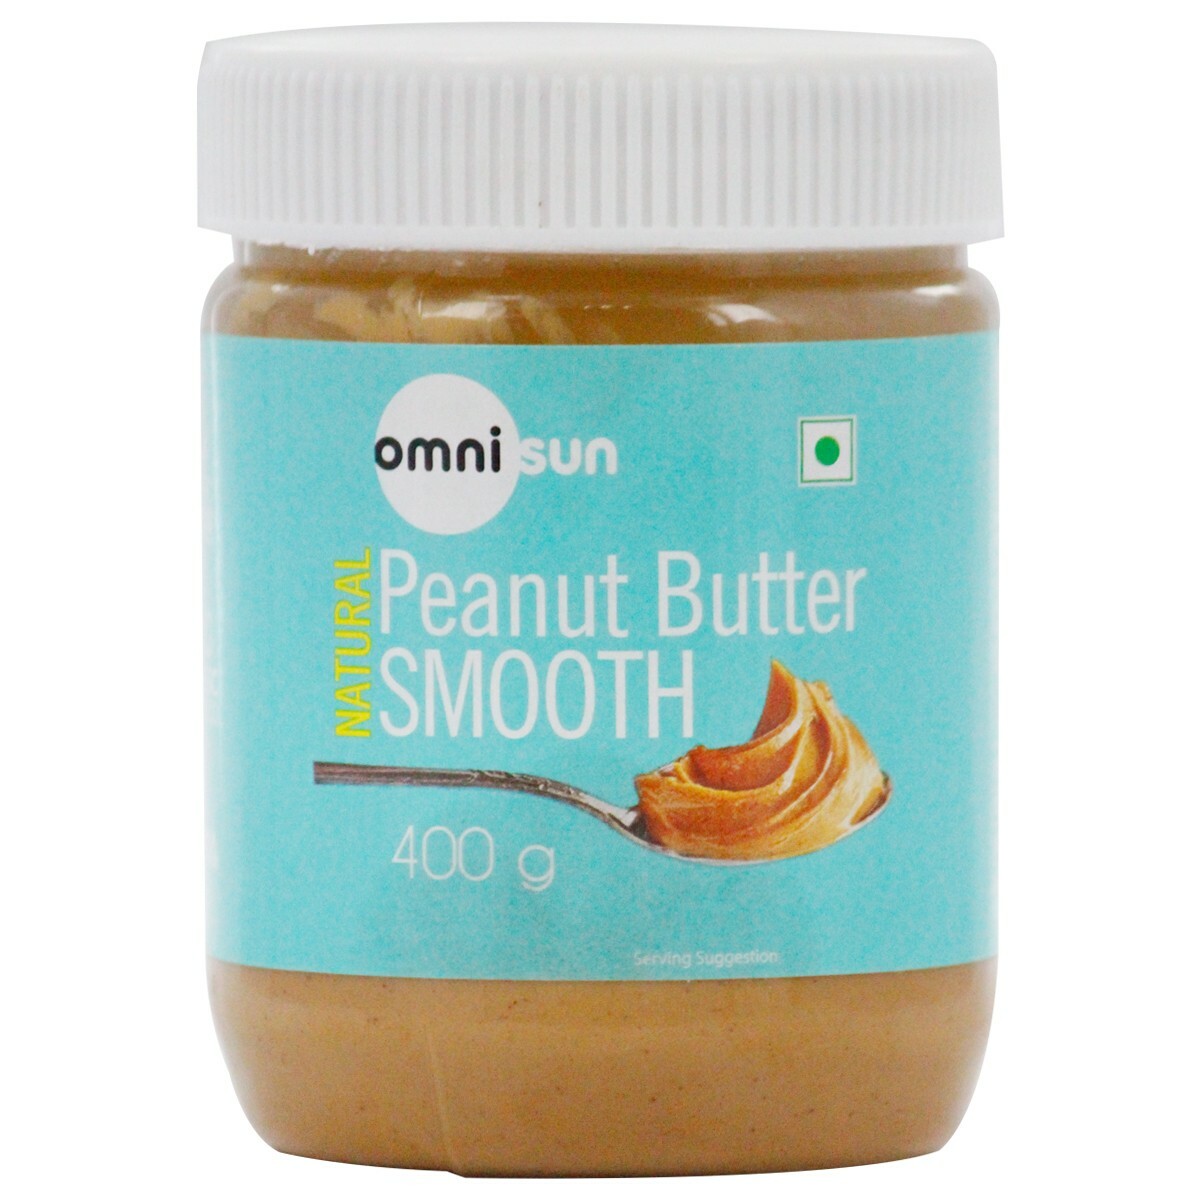 Omnisun Peanut Butter Smooth Natural 400g